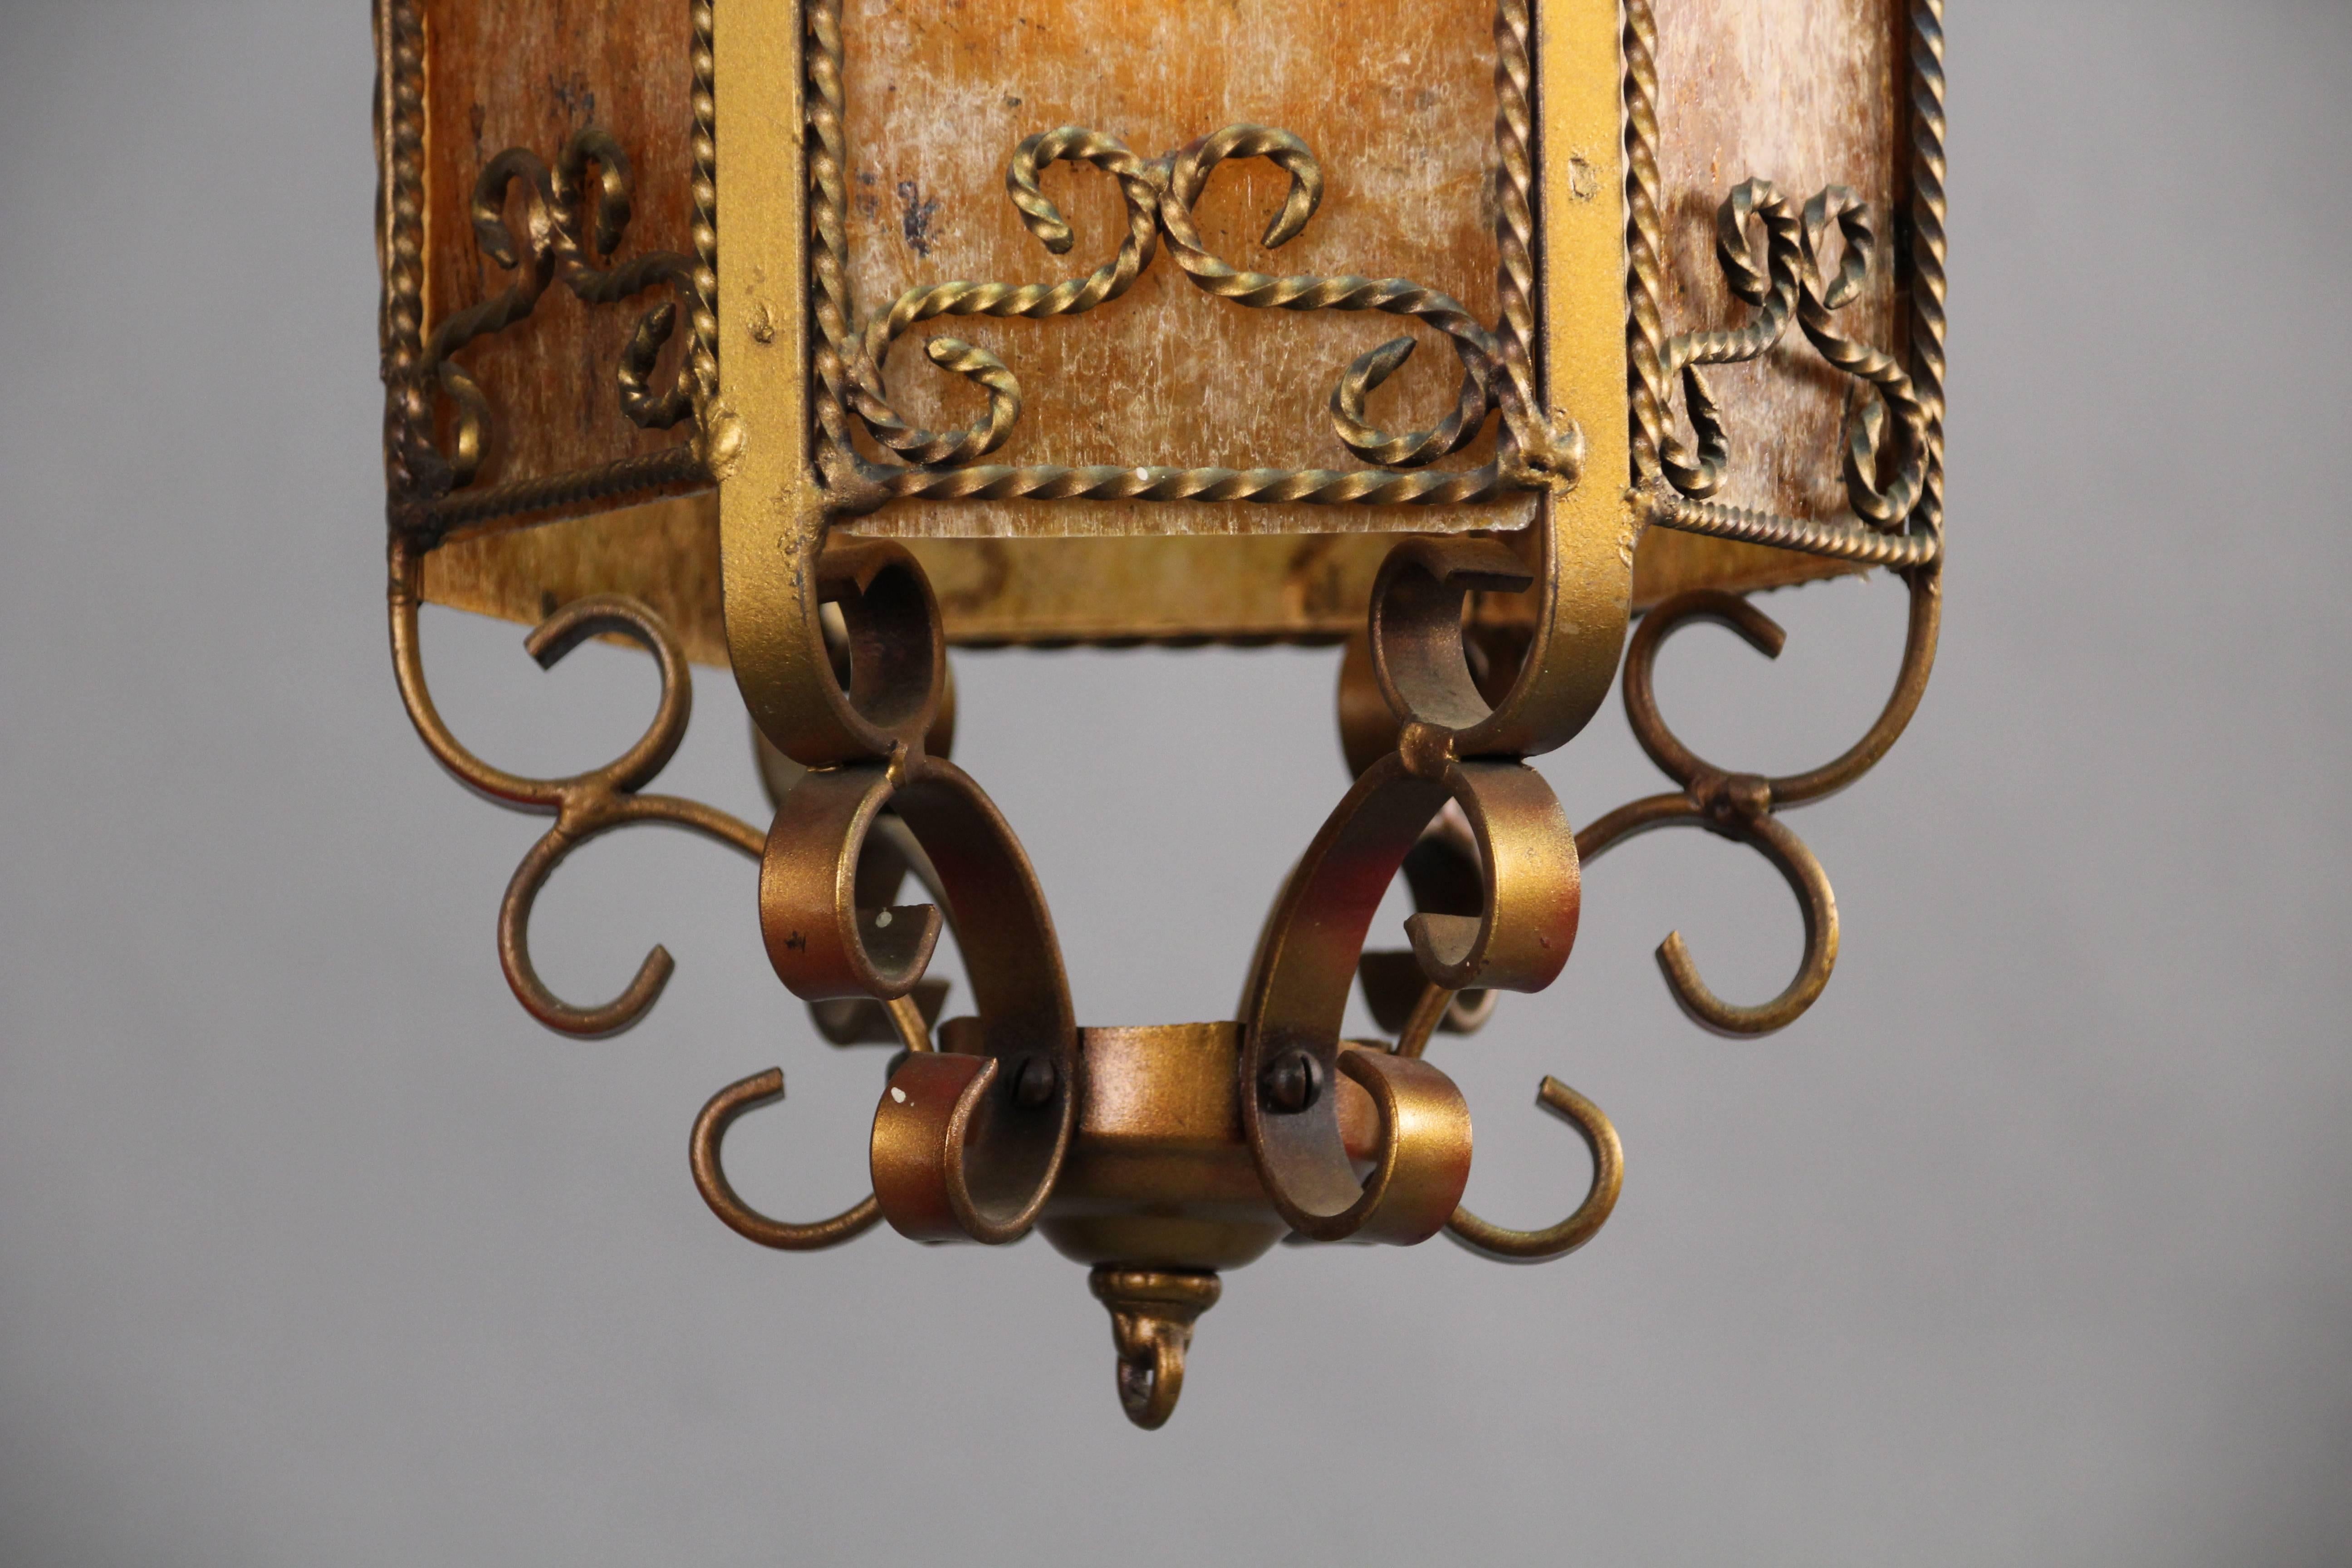 Spanish Revival pendant with original polychrome finish, circa 1920s.